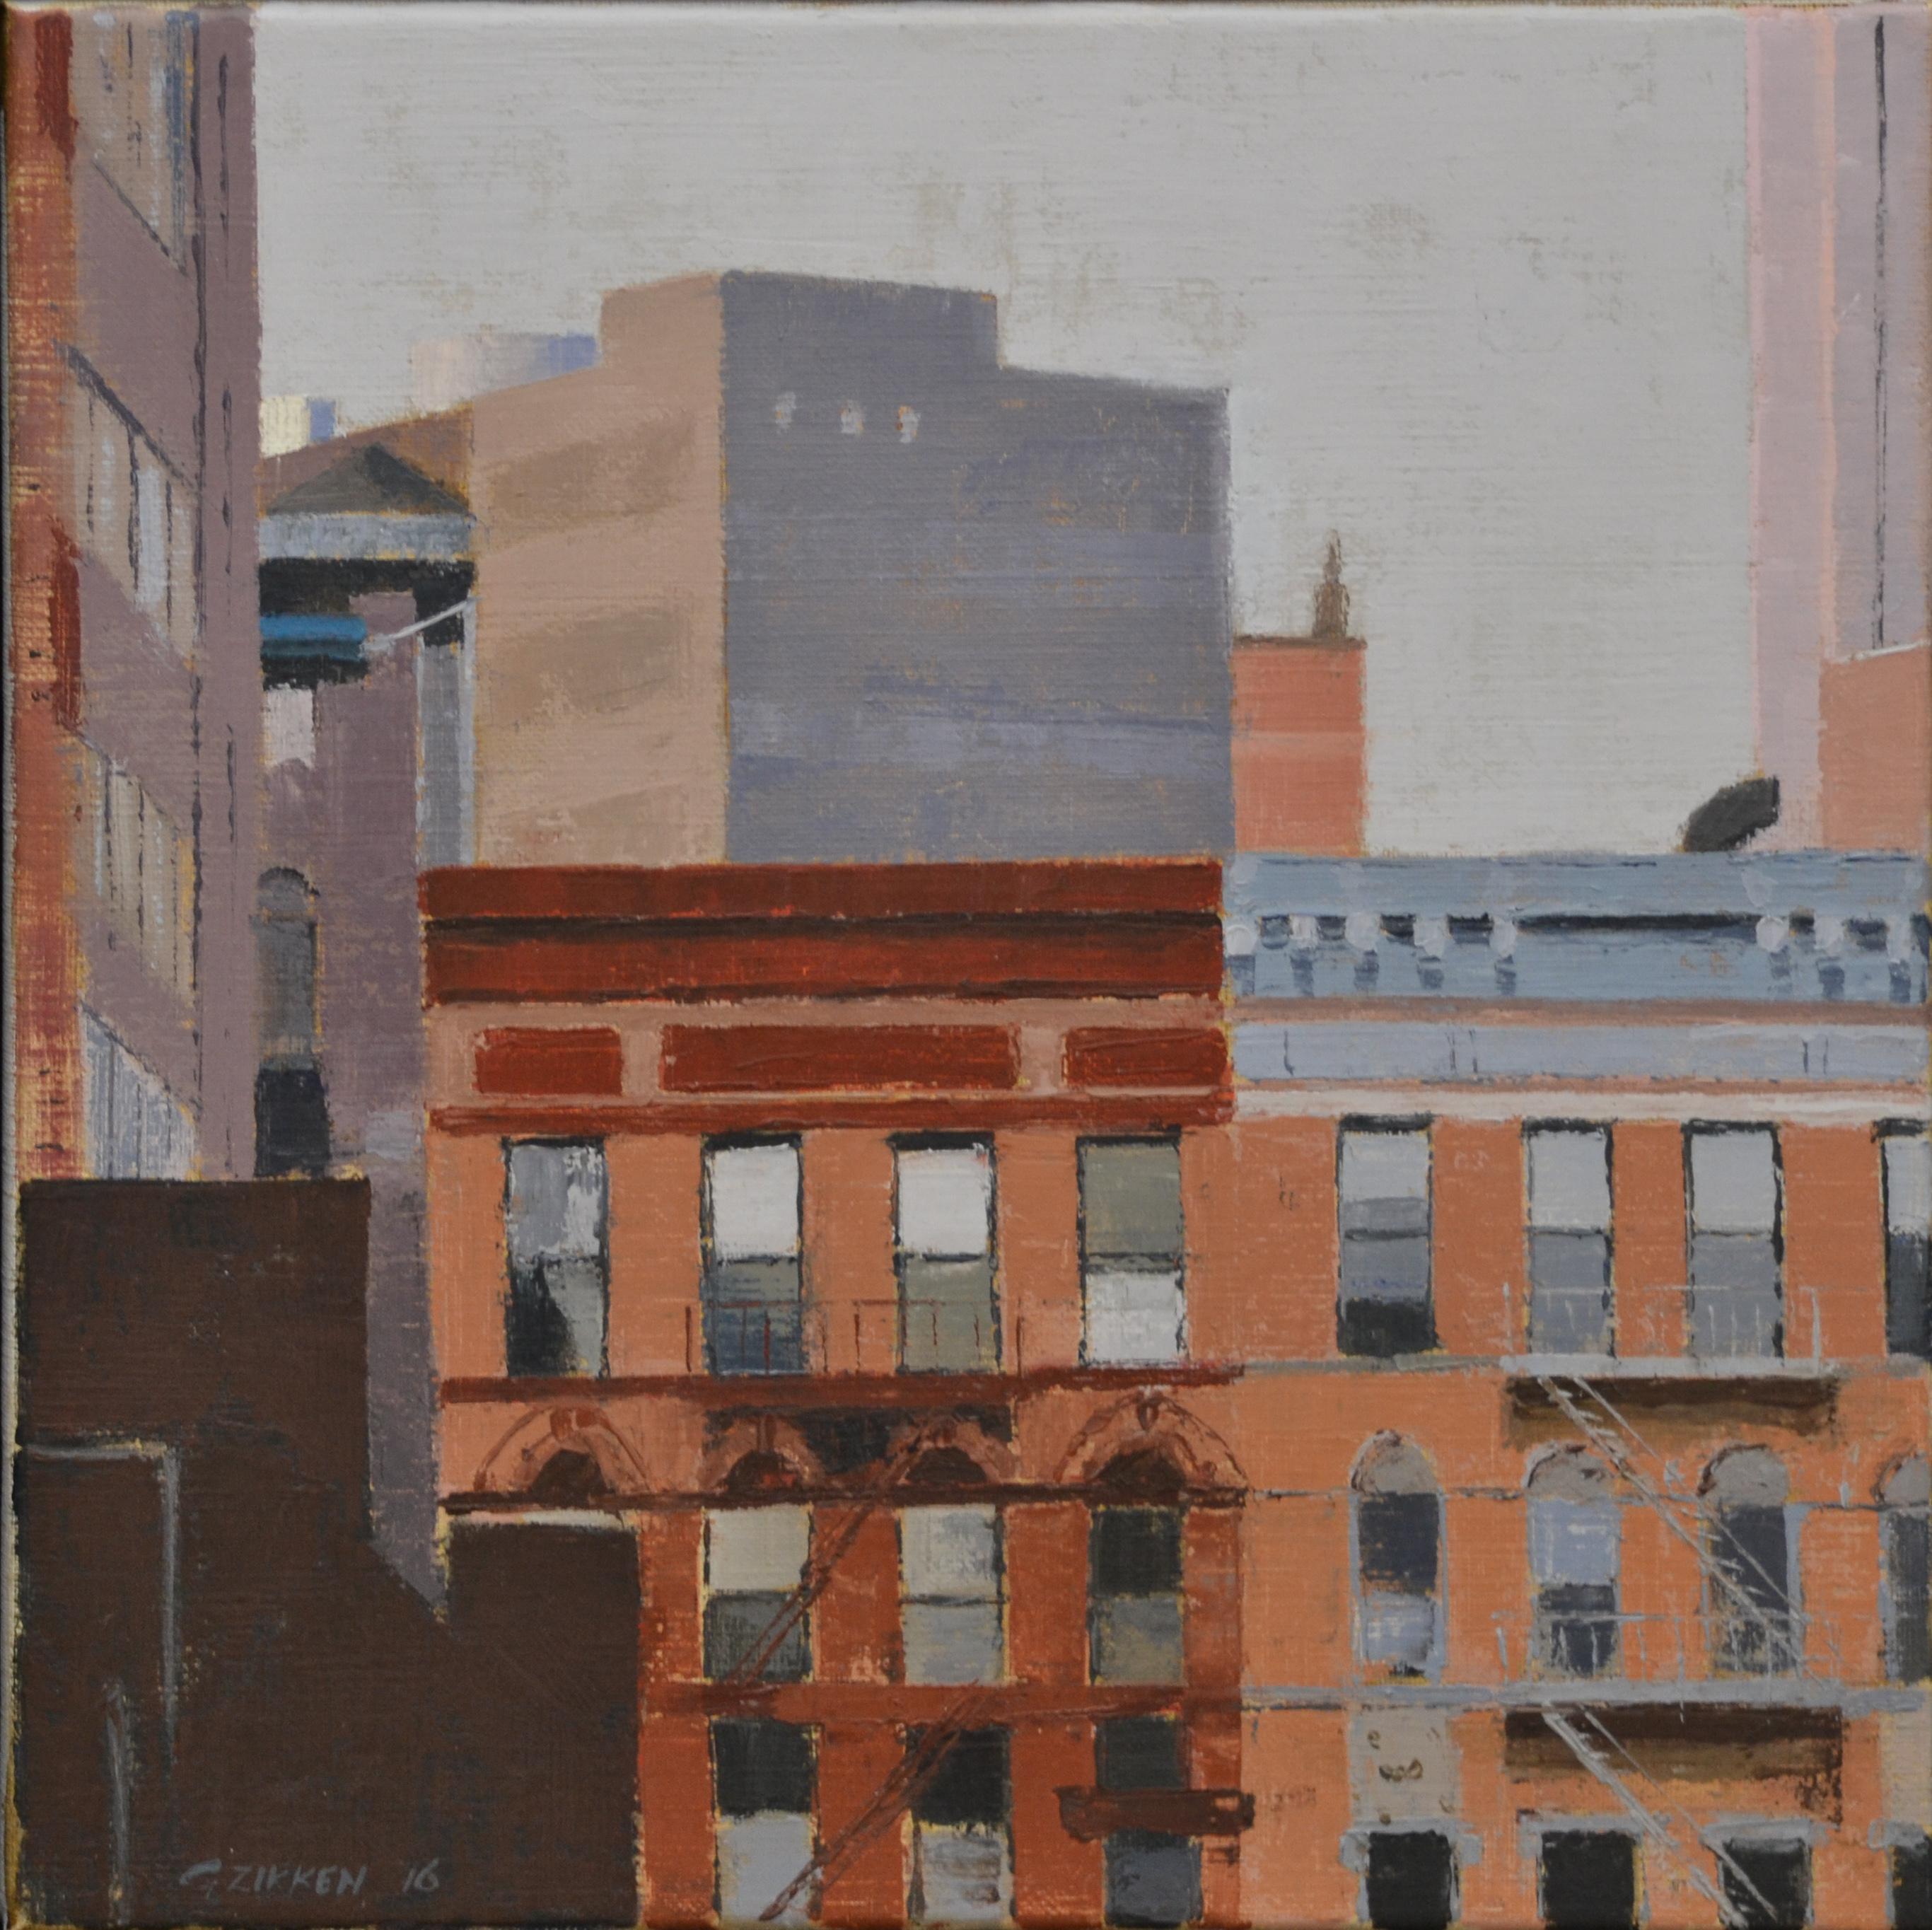 New York II- 21 st Century Contemporary City Painting